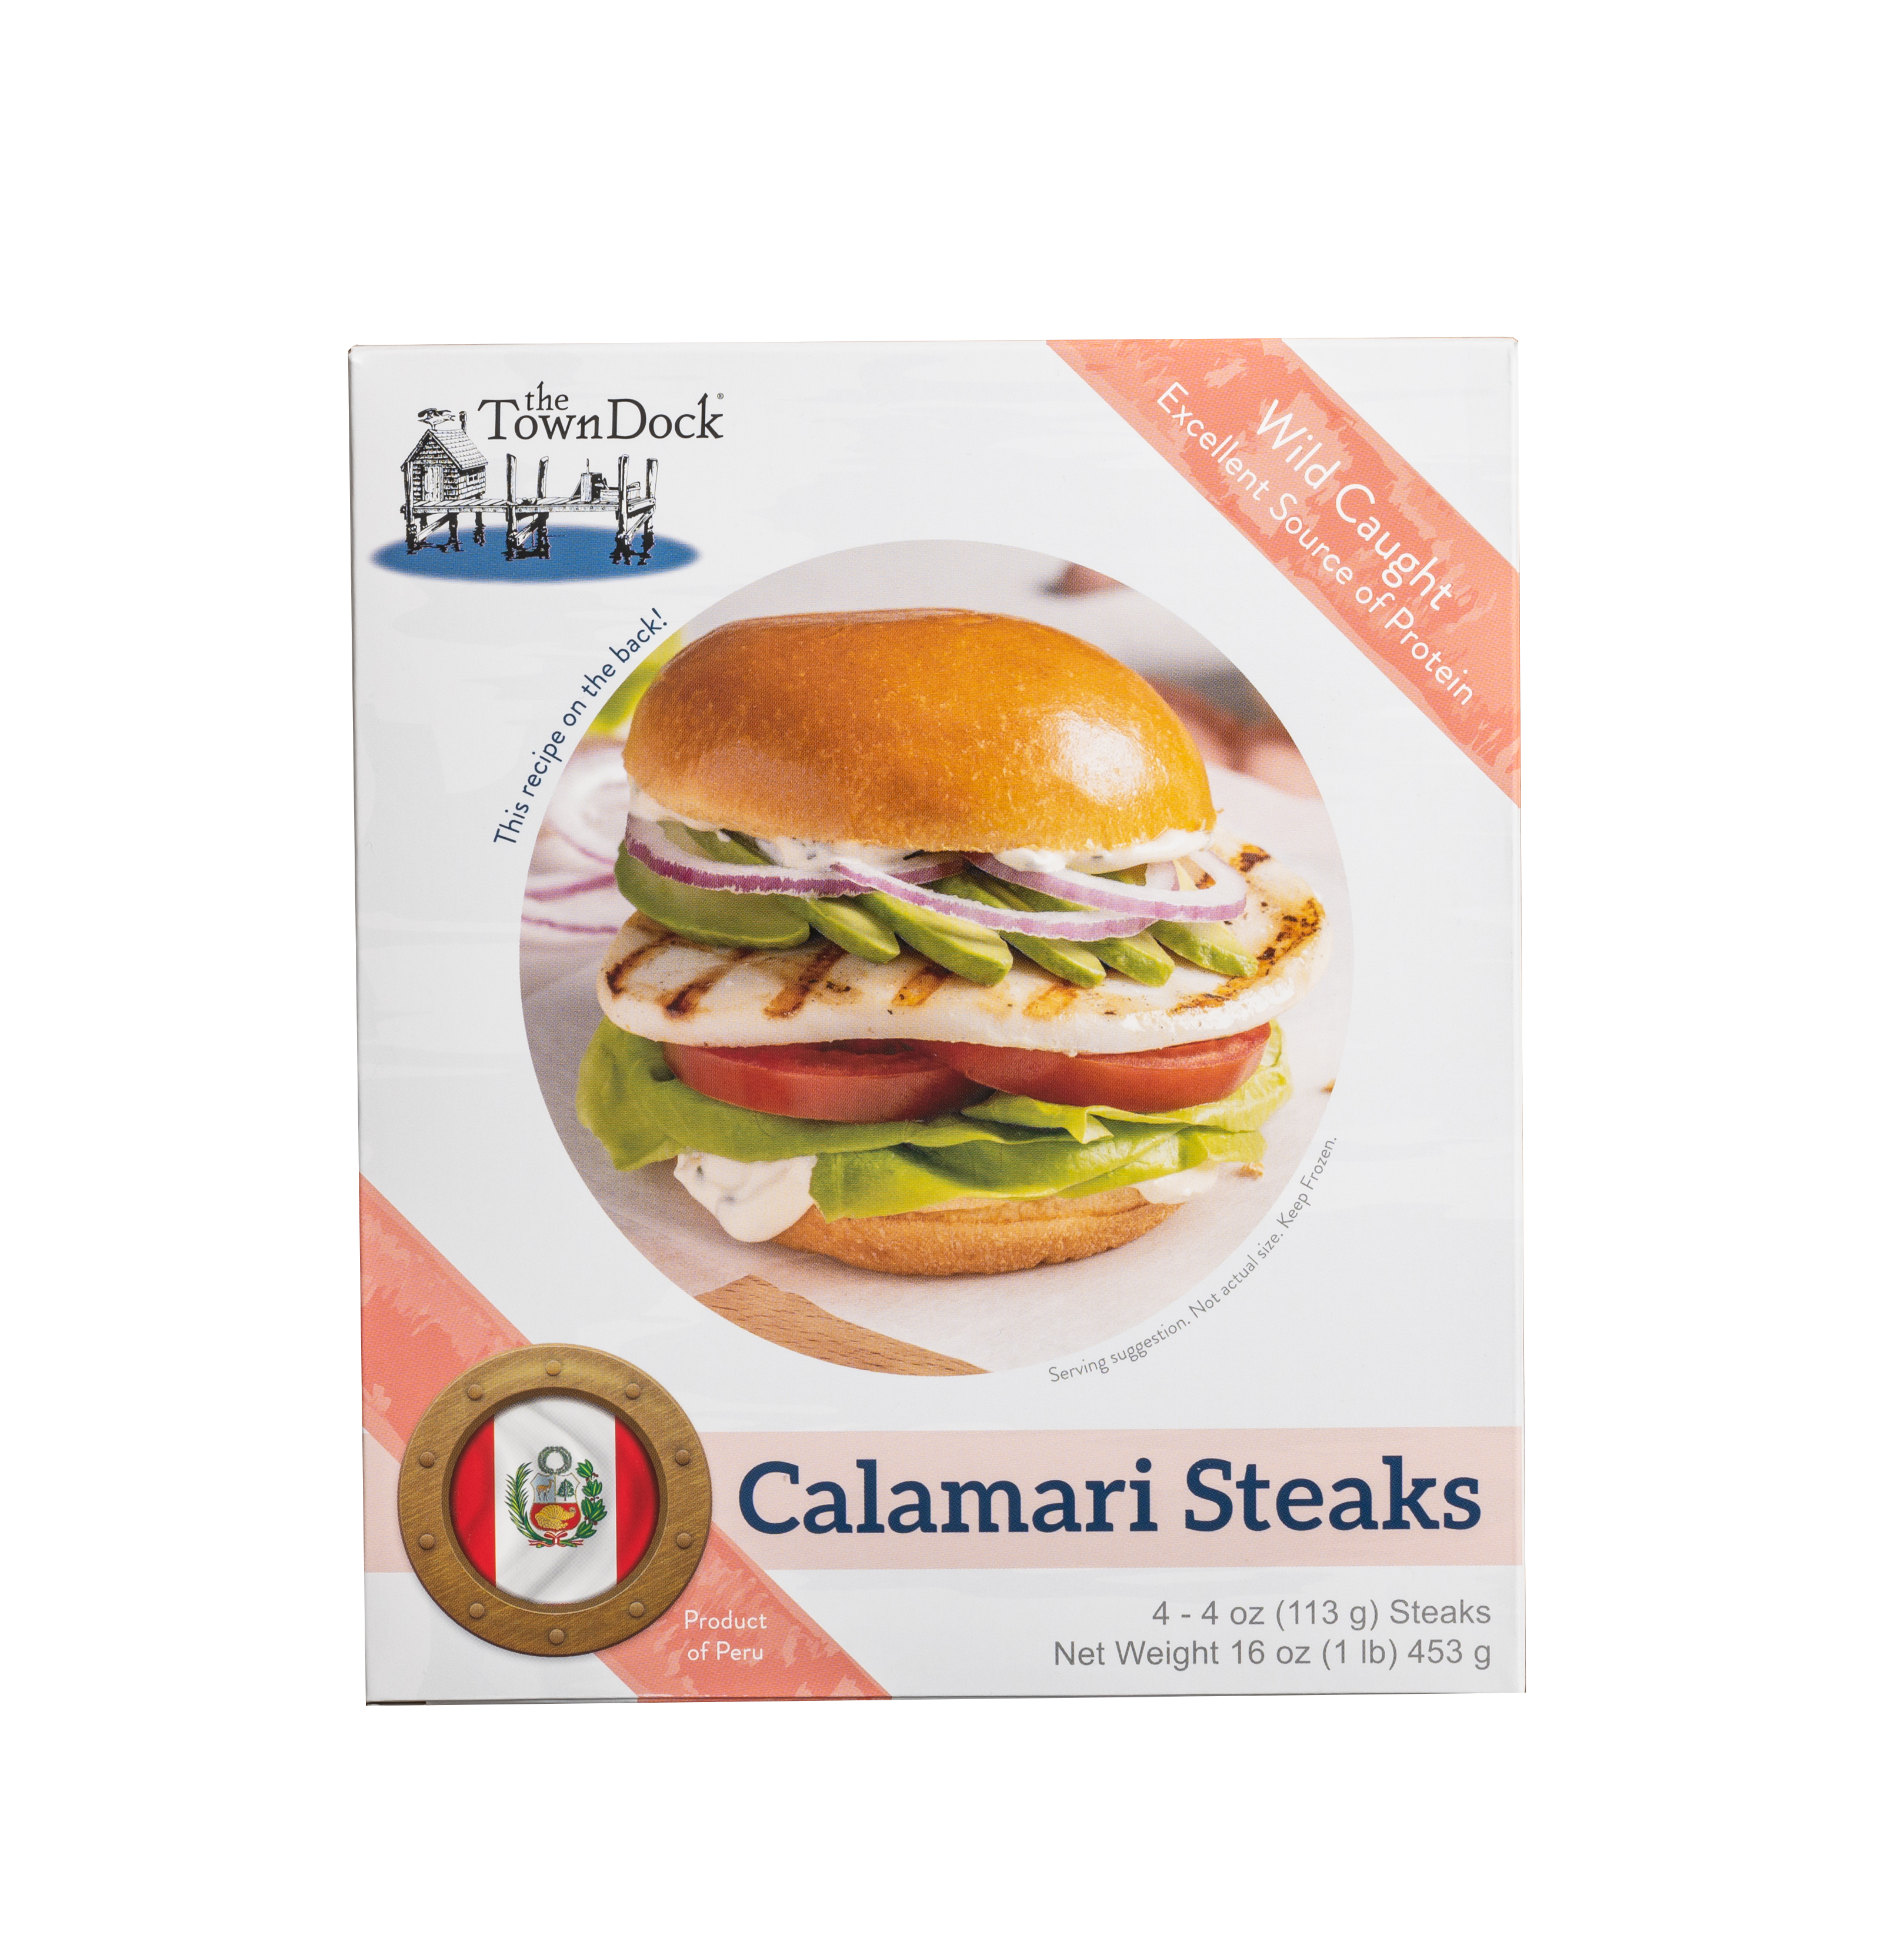 Calamari Steaks box with coral-colored wrap